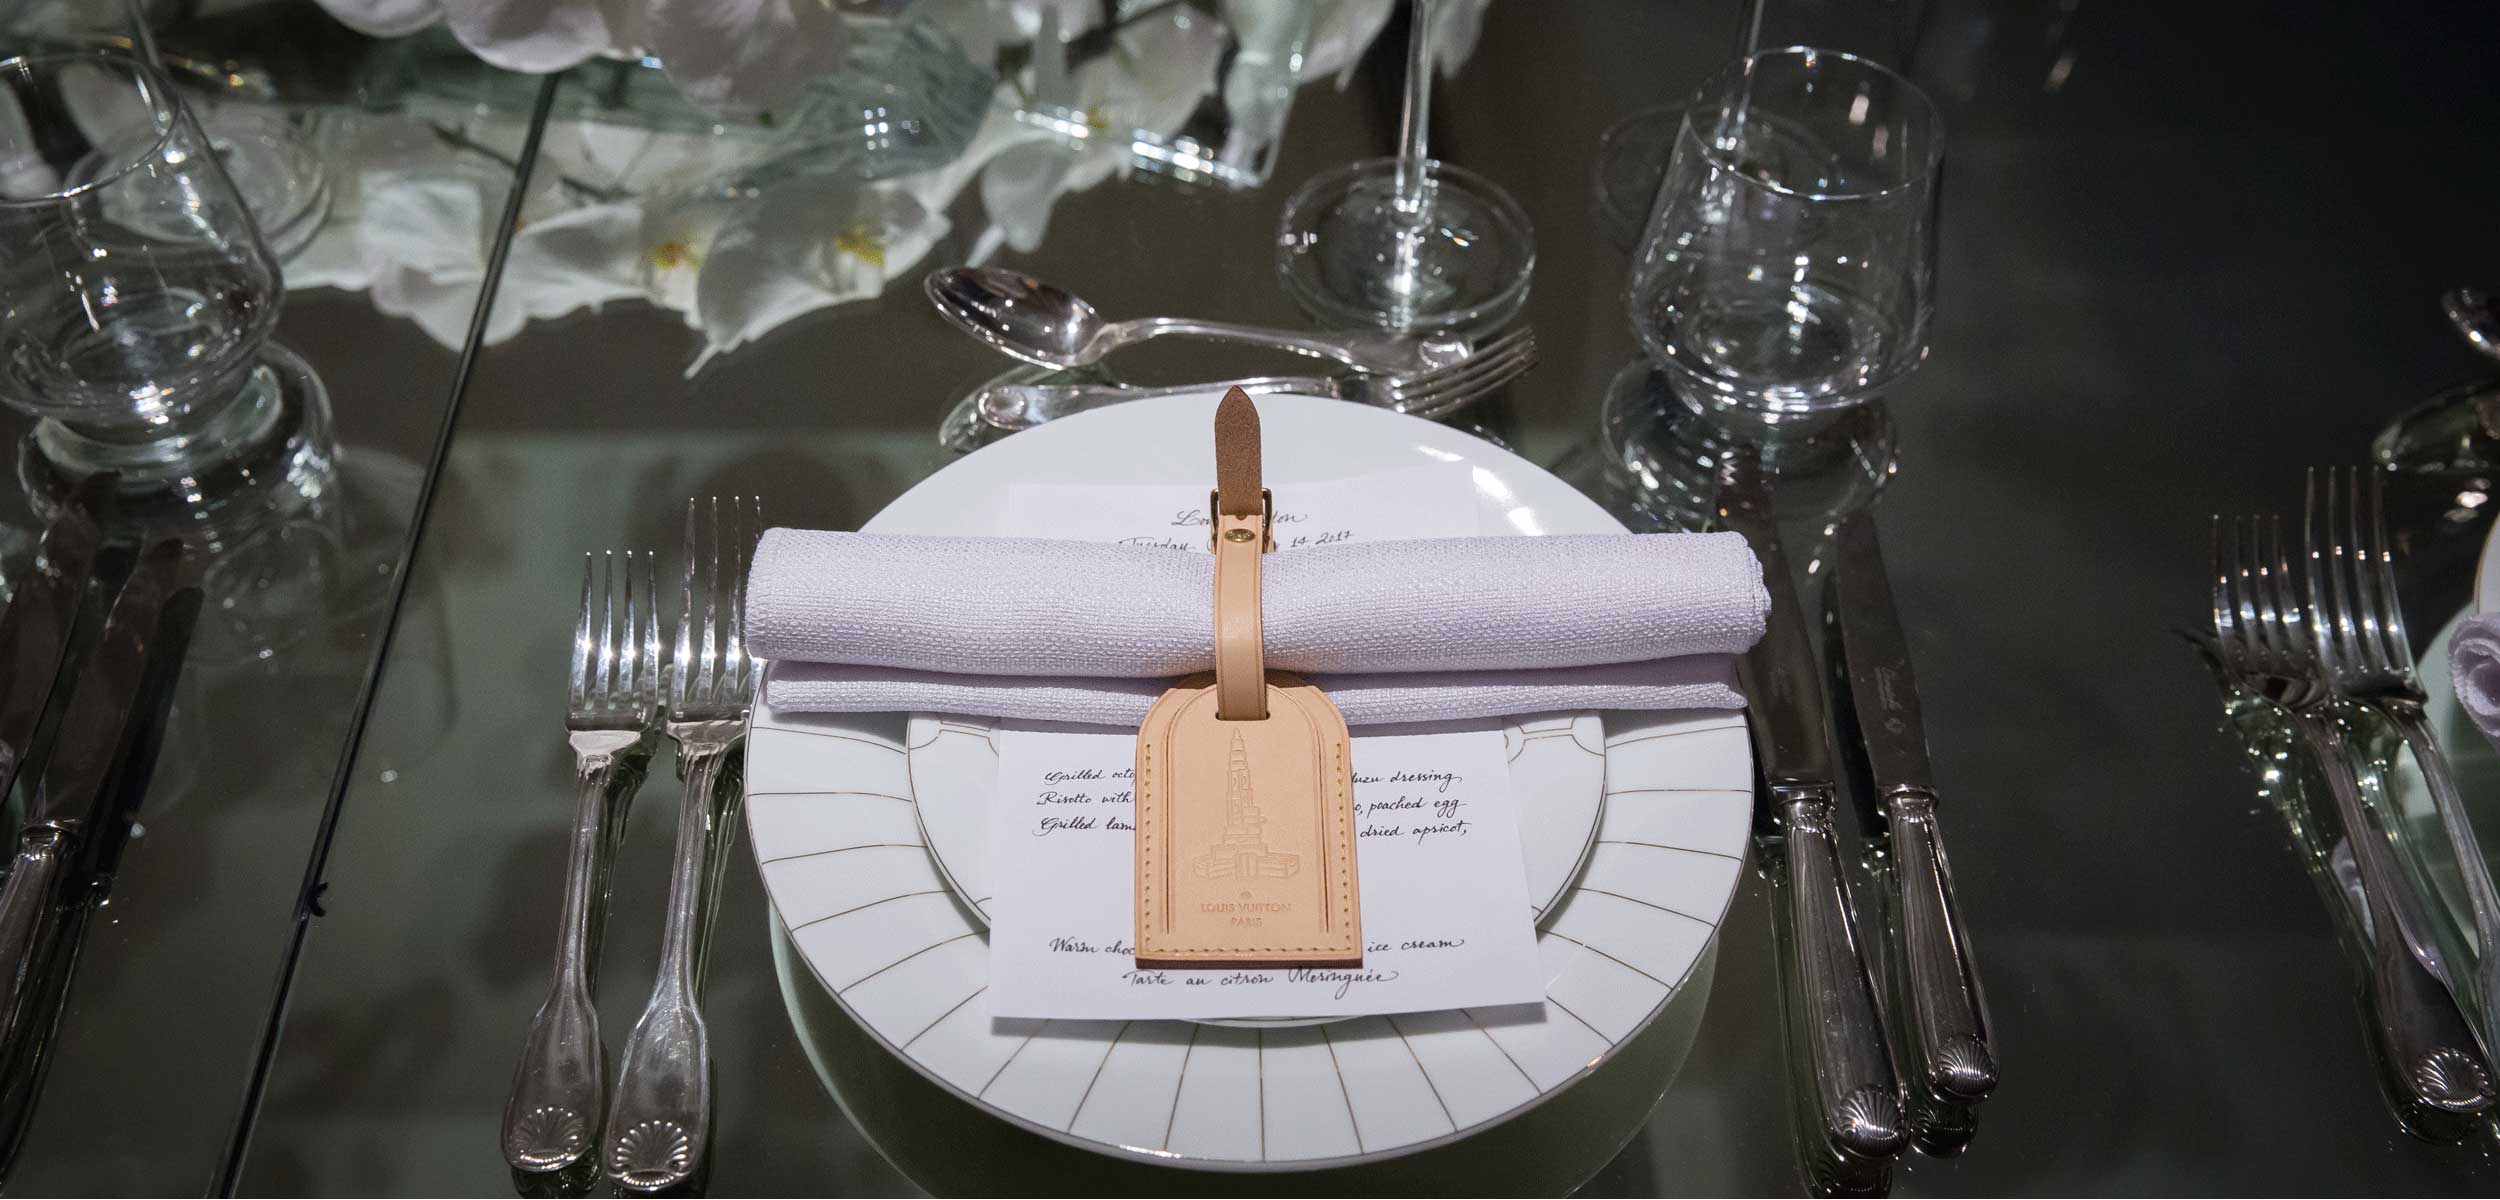 Louis Vuitton Foundation Dinner